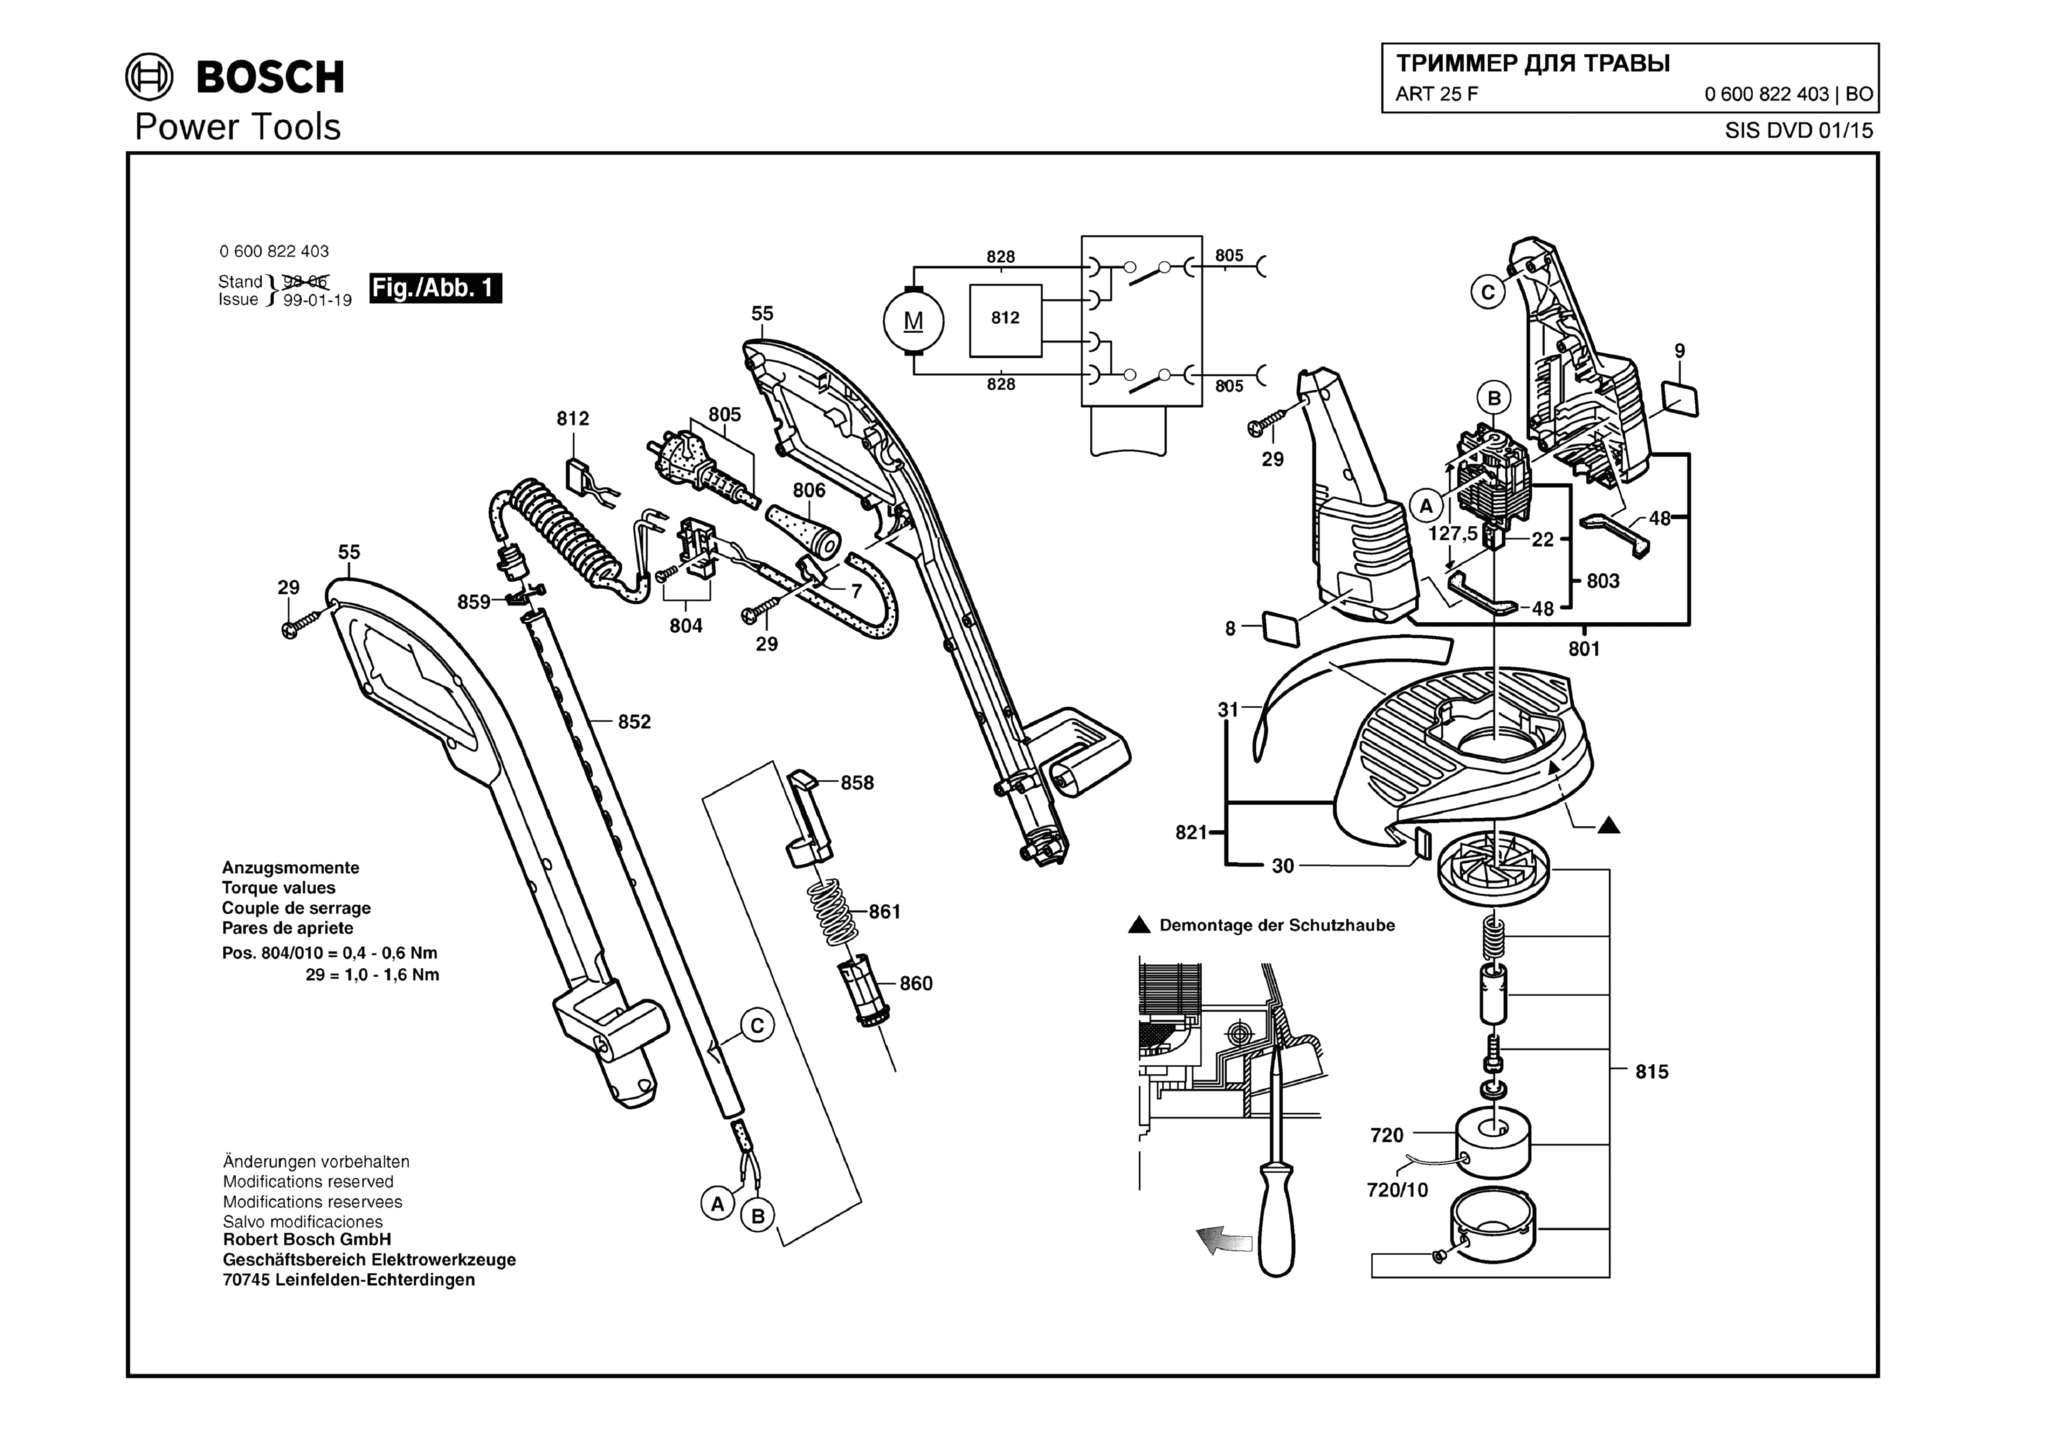 Запчасти, схема и деталировка Bosch ART 25 F (ТИП 0600822403)